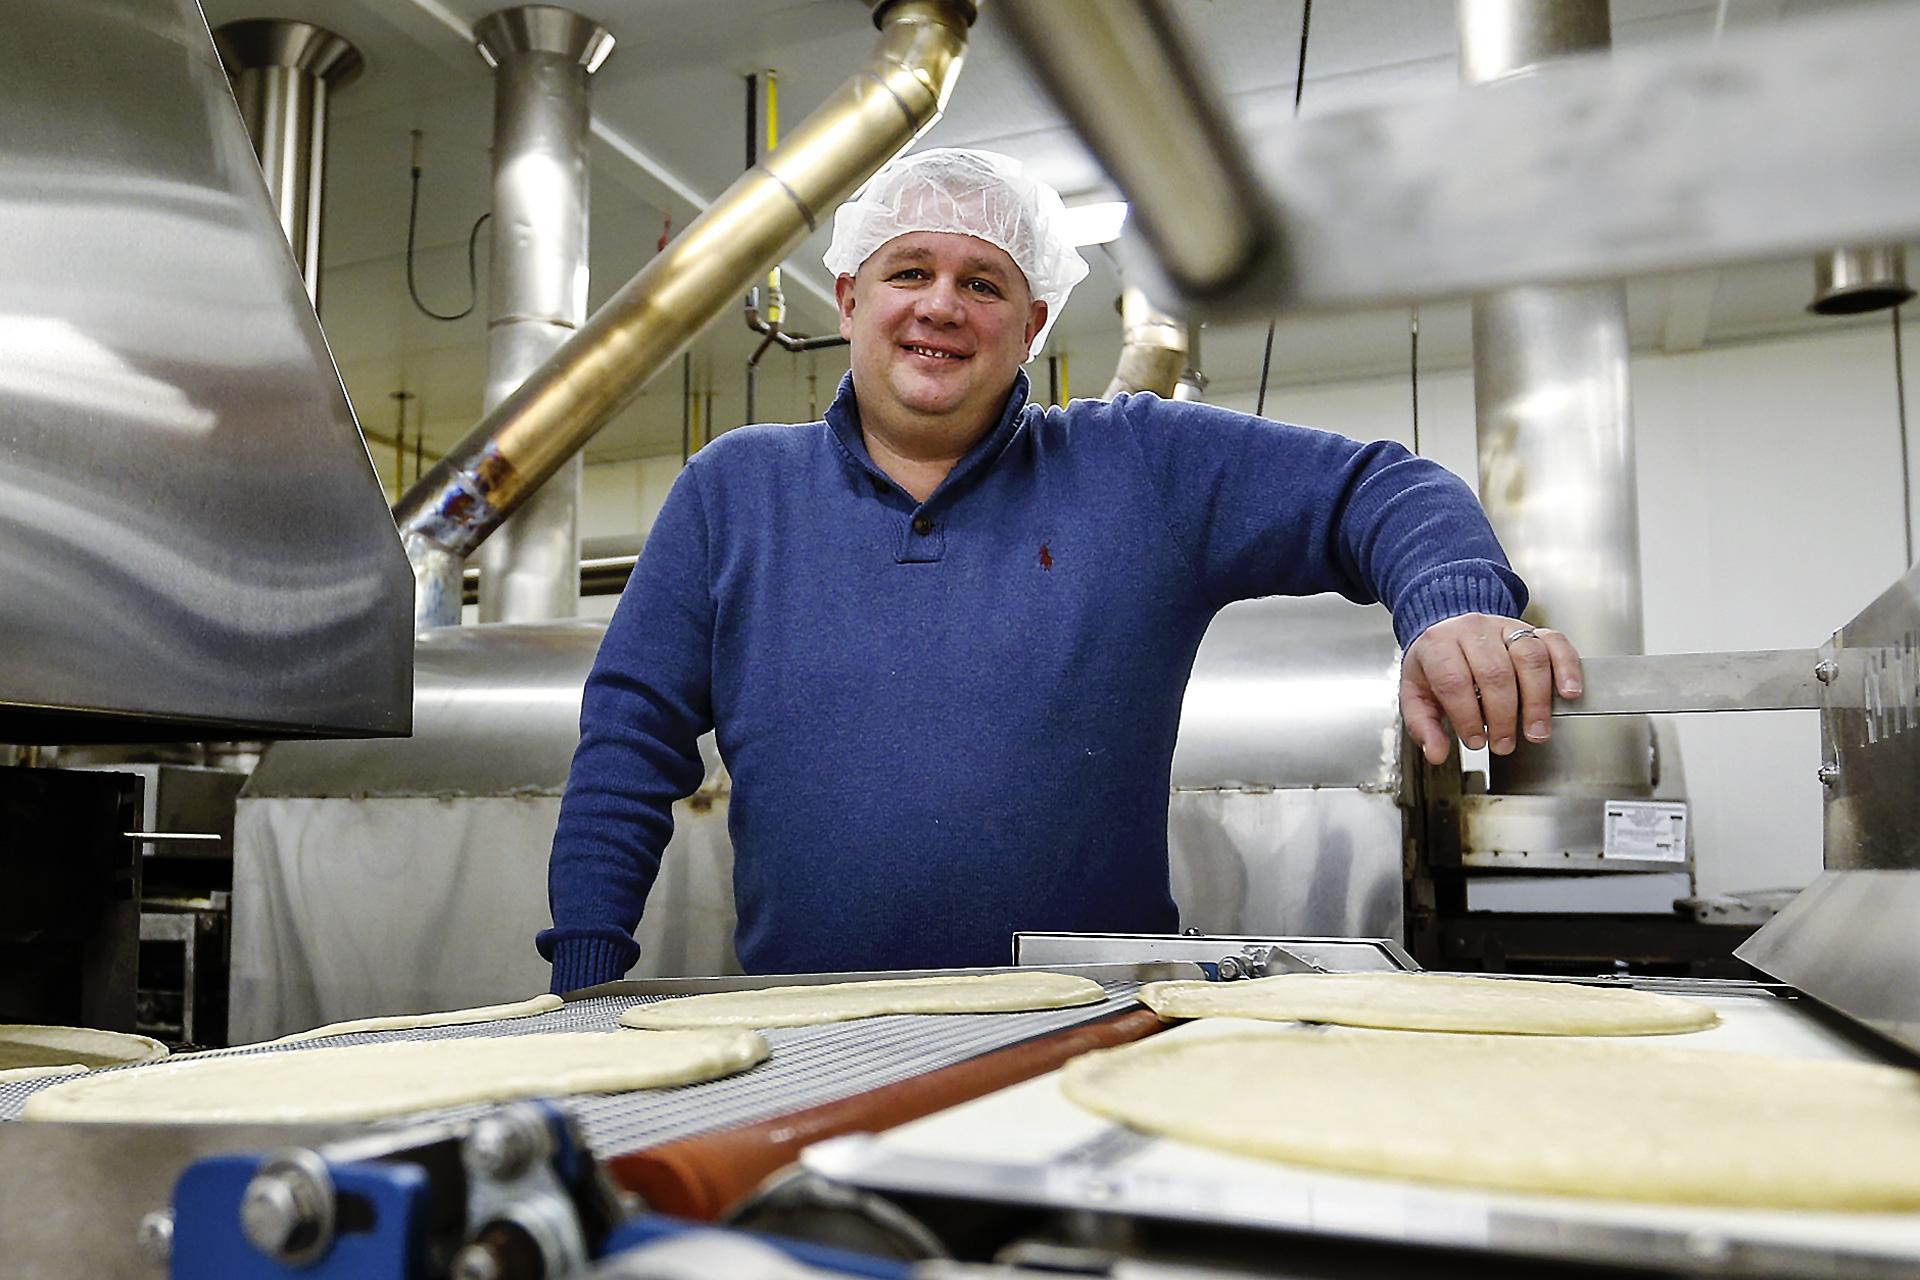 Man in hairnet stands behind pizza-making machine